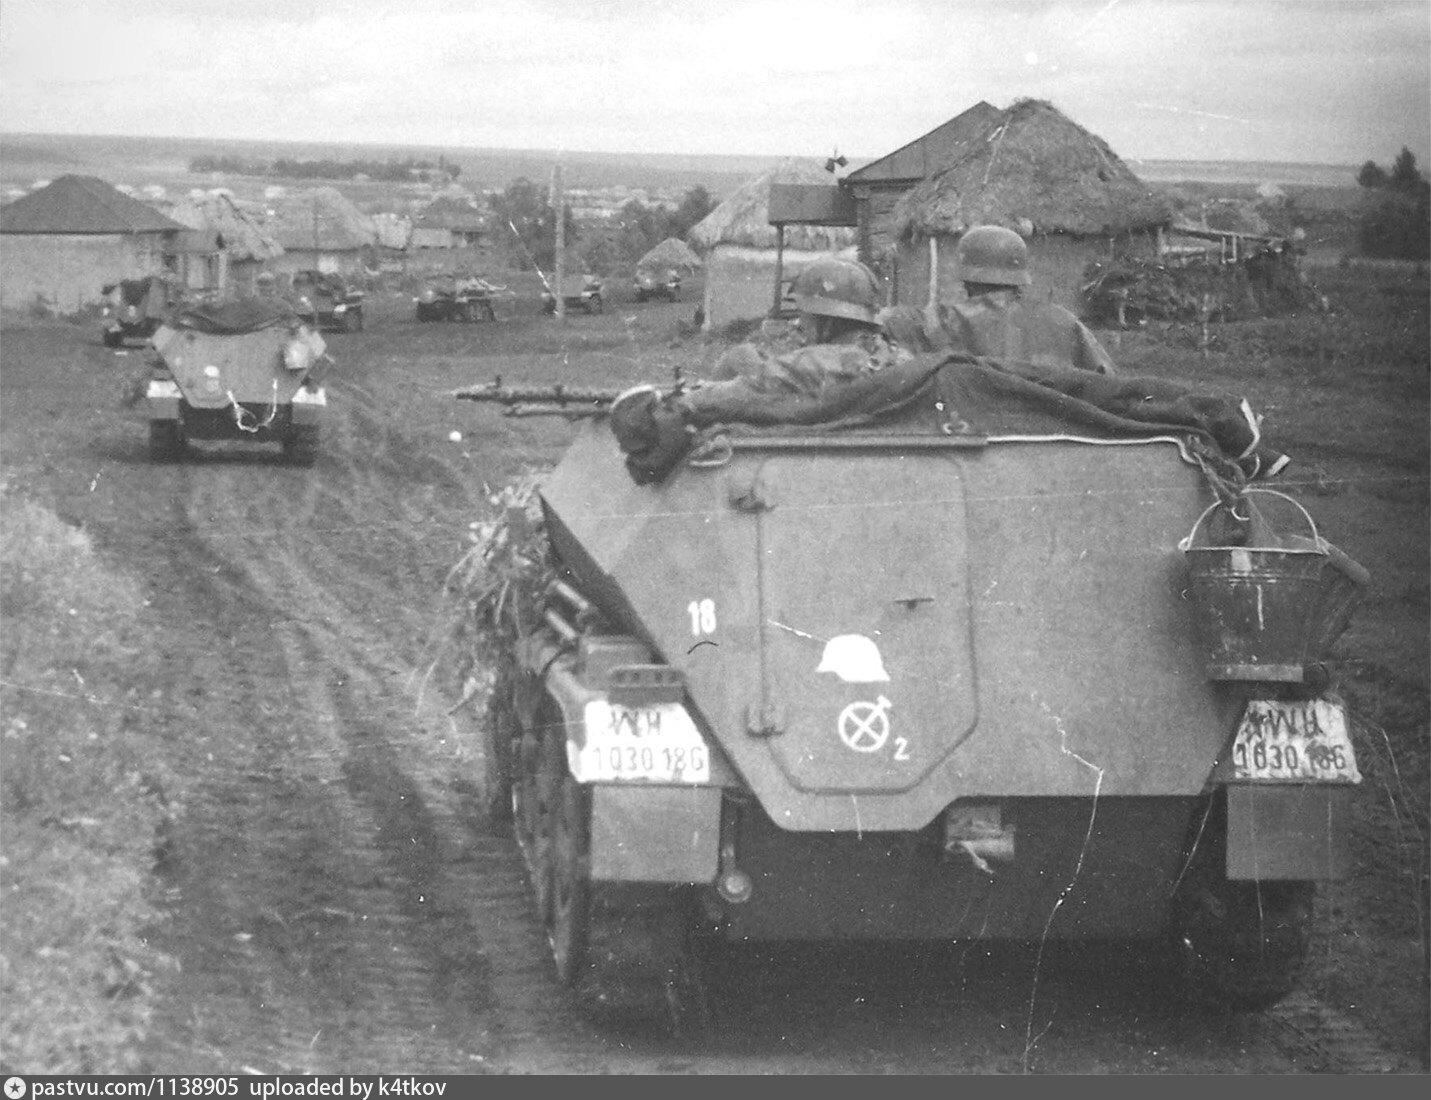 SD KFZ 251 дивизии Великая Германия